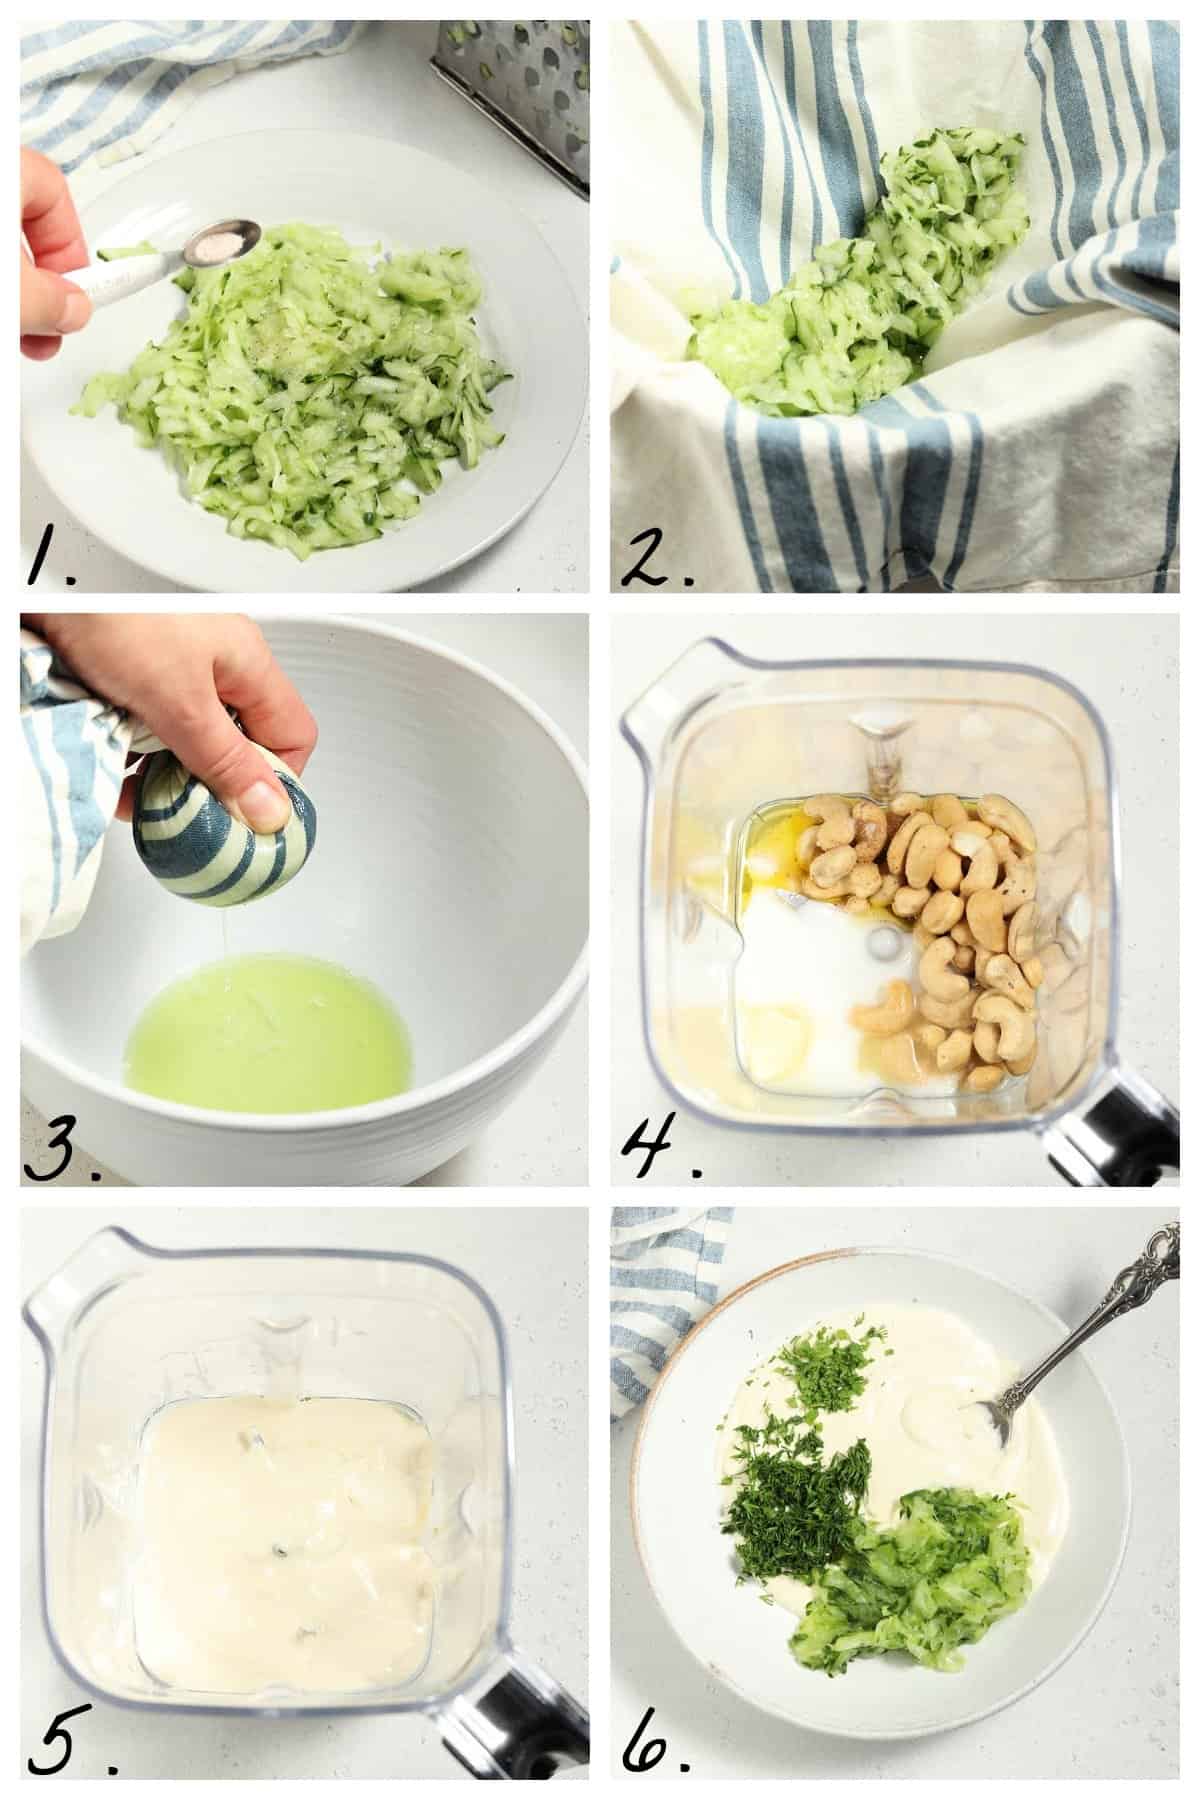 6 process photos showing how to make tzatziki.